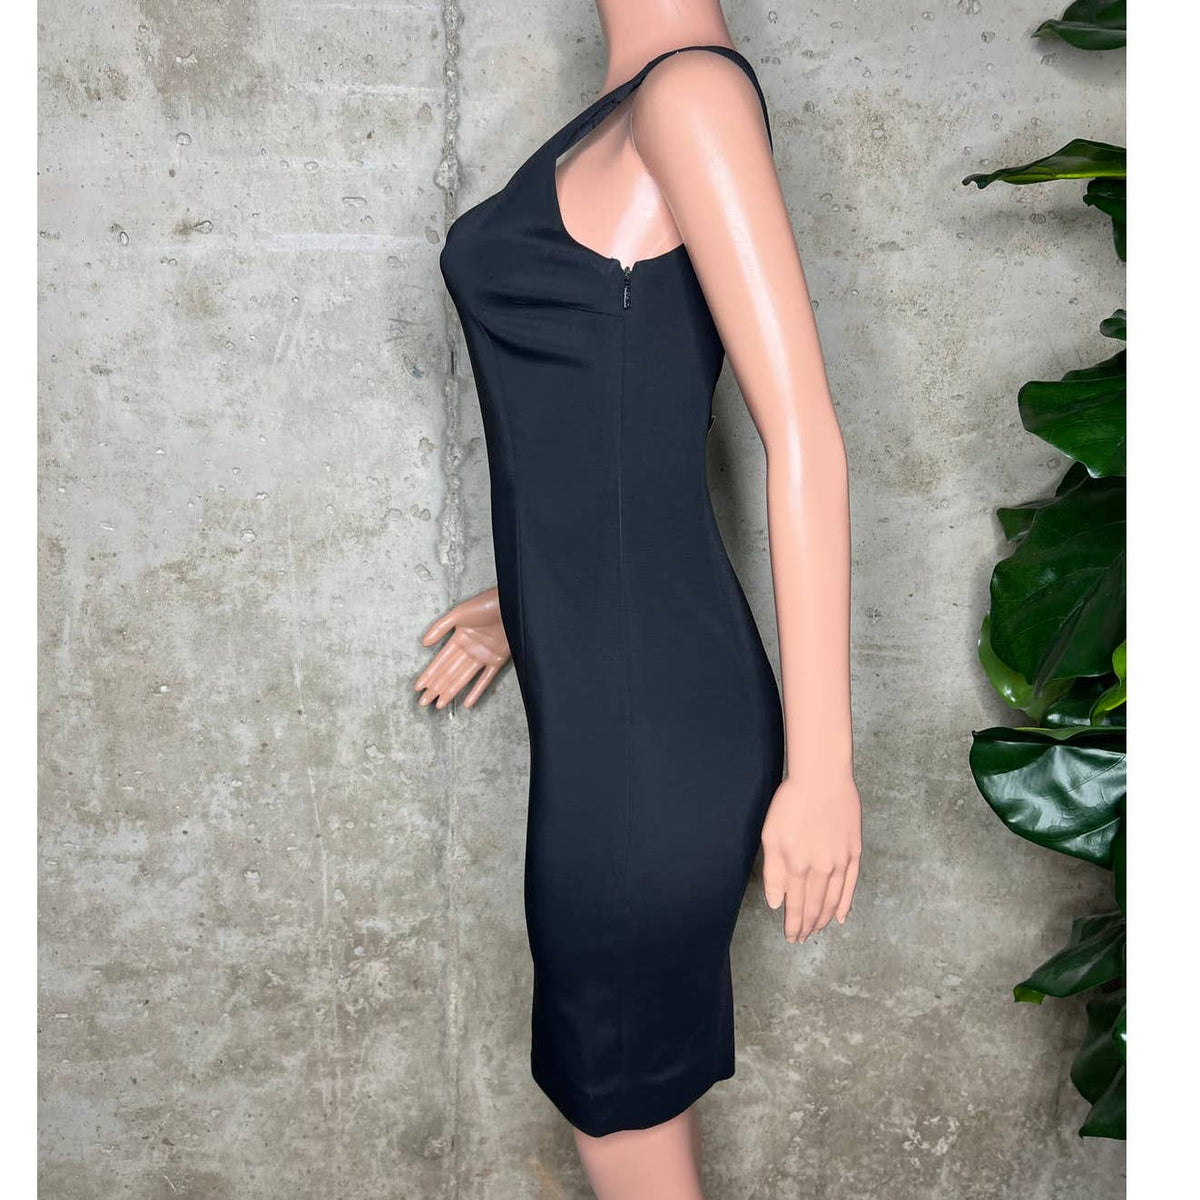 Versace Black Sleeveless Grommet Dress Sz.42